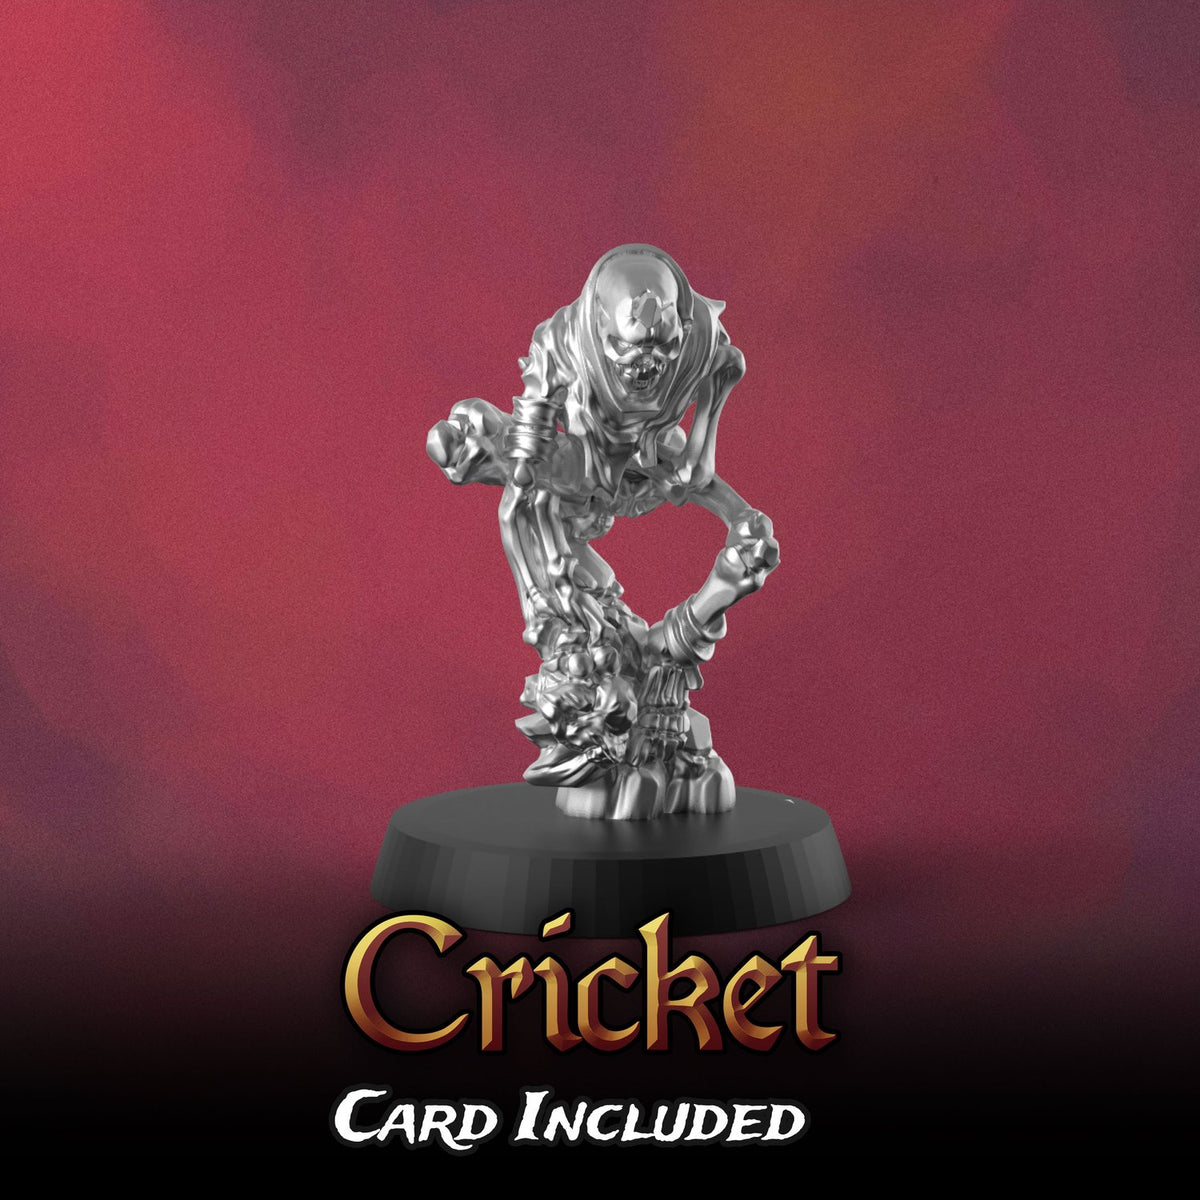 Paragon: Cricket Miniature Metal King Studio Exit 23 Games Paragon: Cricket